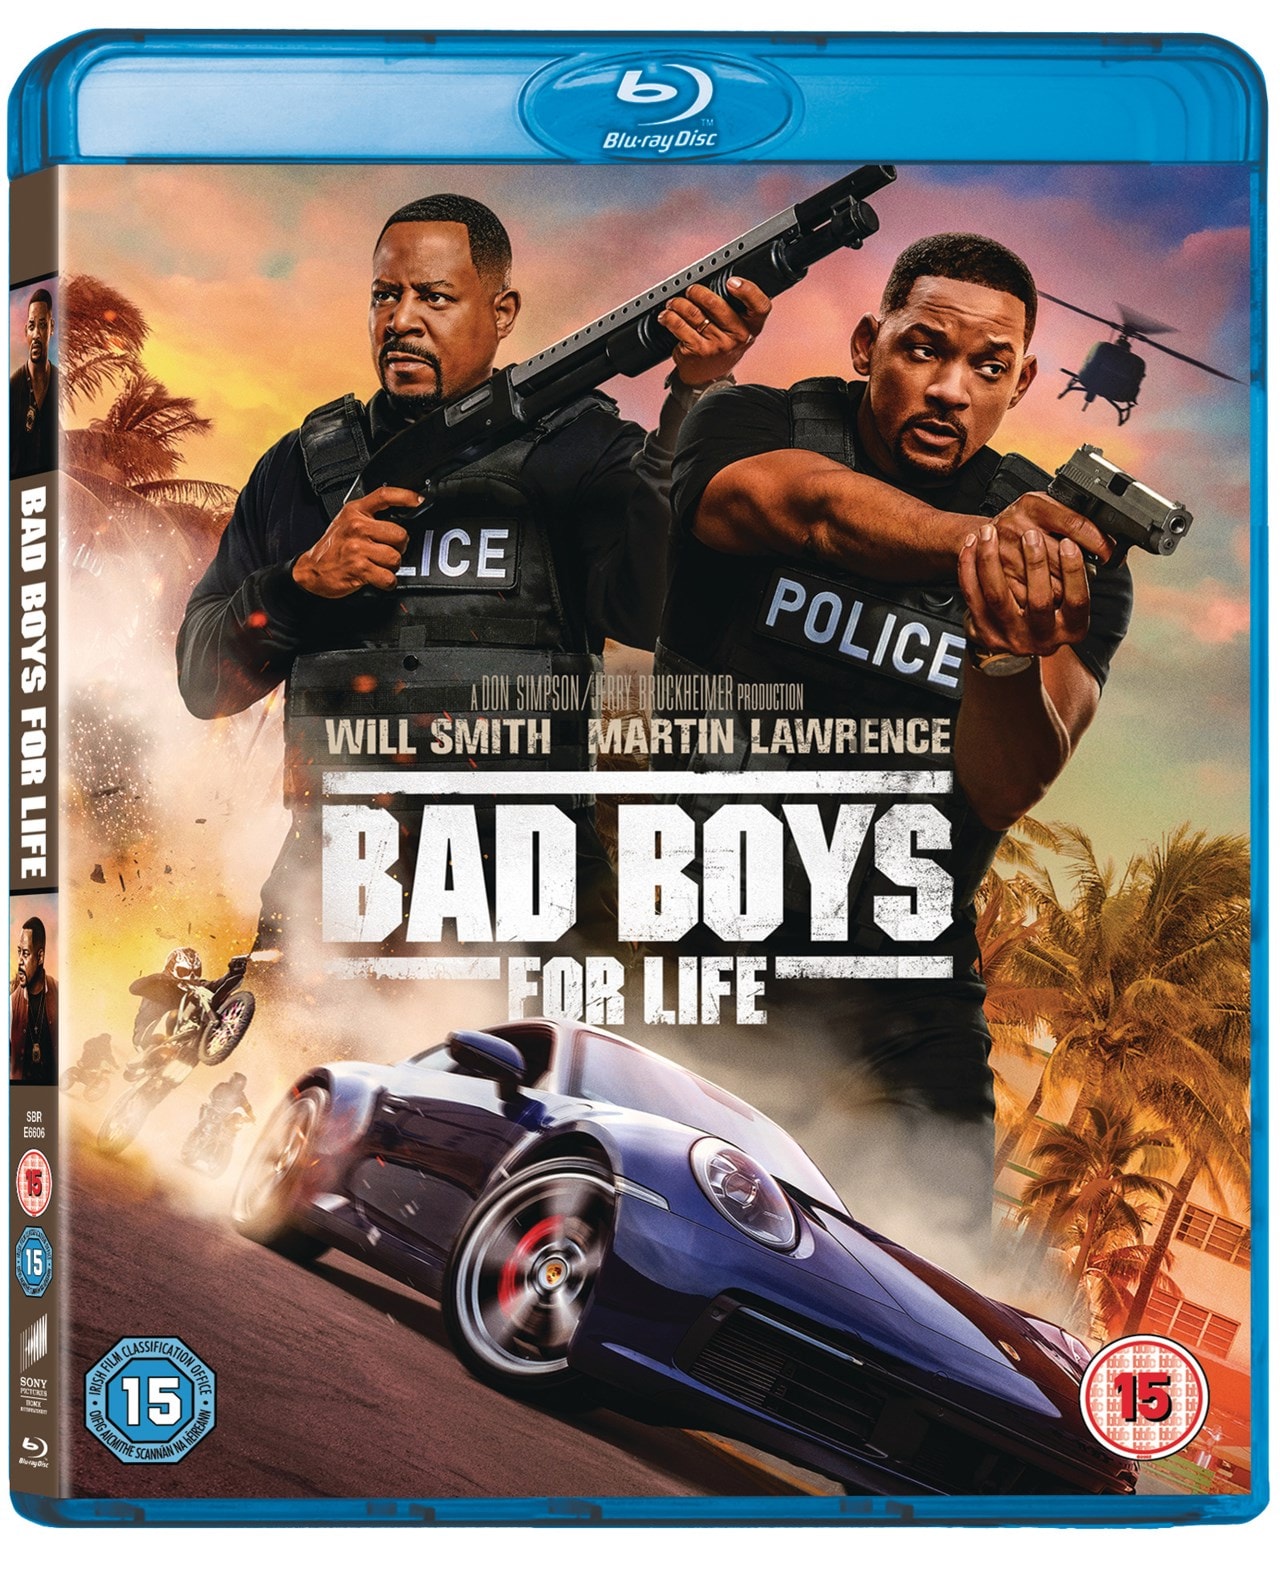 Bad Boys for Life | Blu-ray | Free shipping over £20 | HMV ...